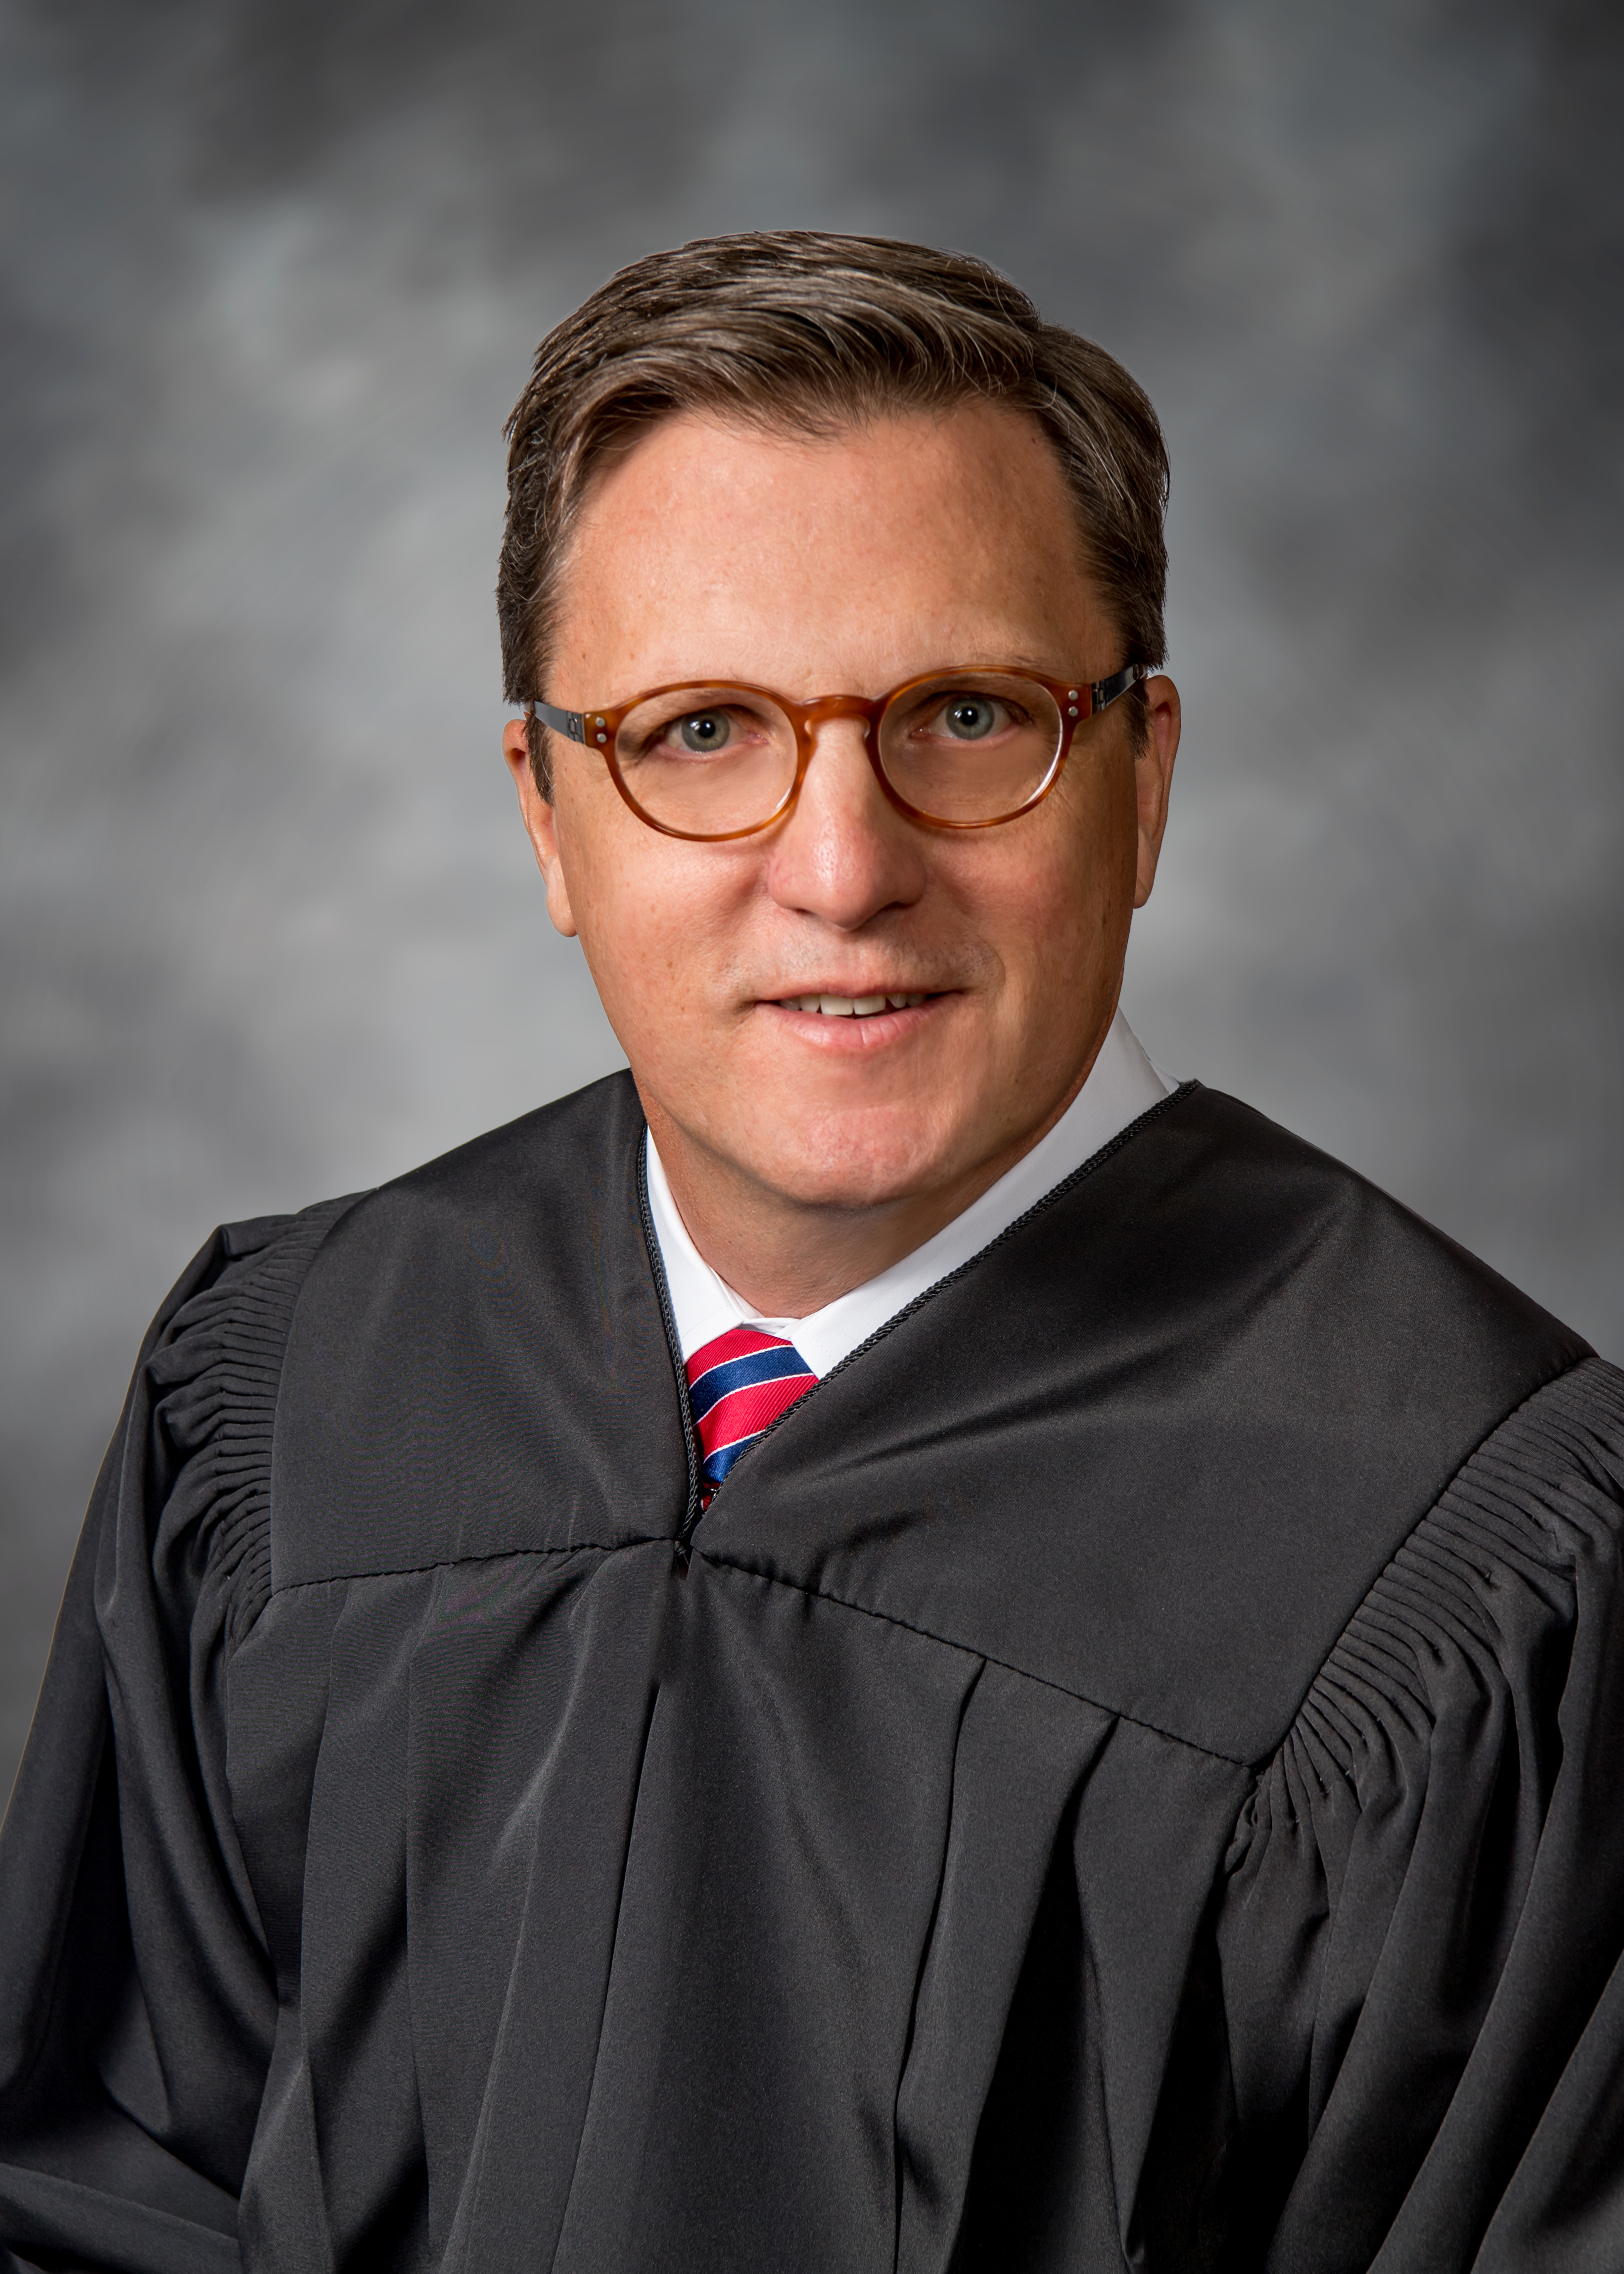 Peter A. Krause, Associate Justice